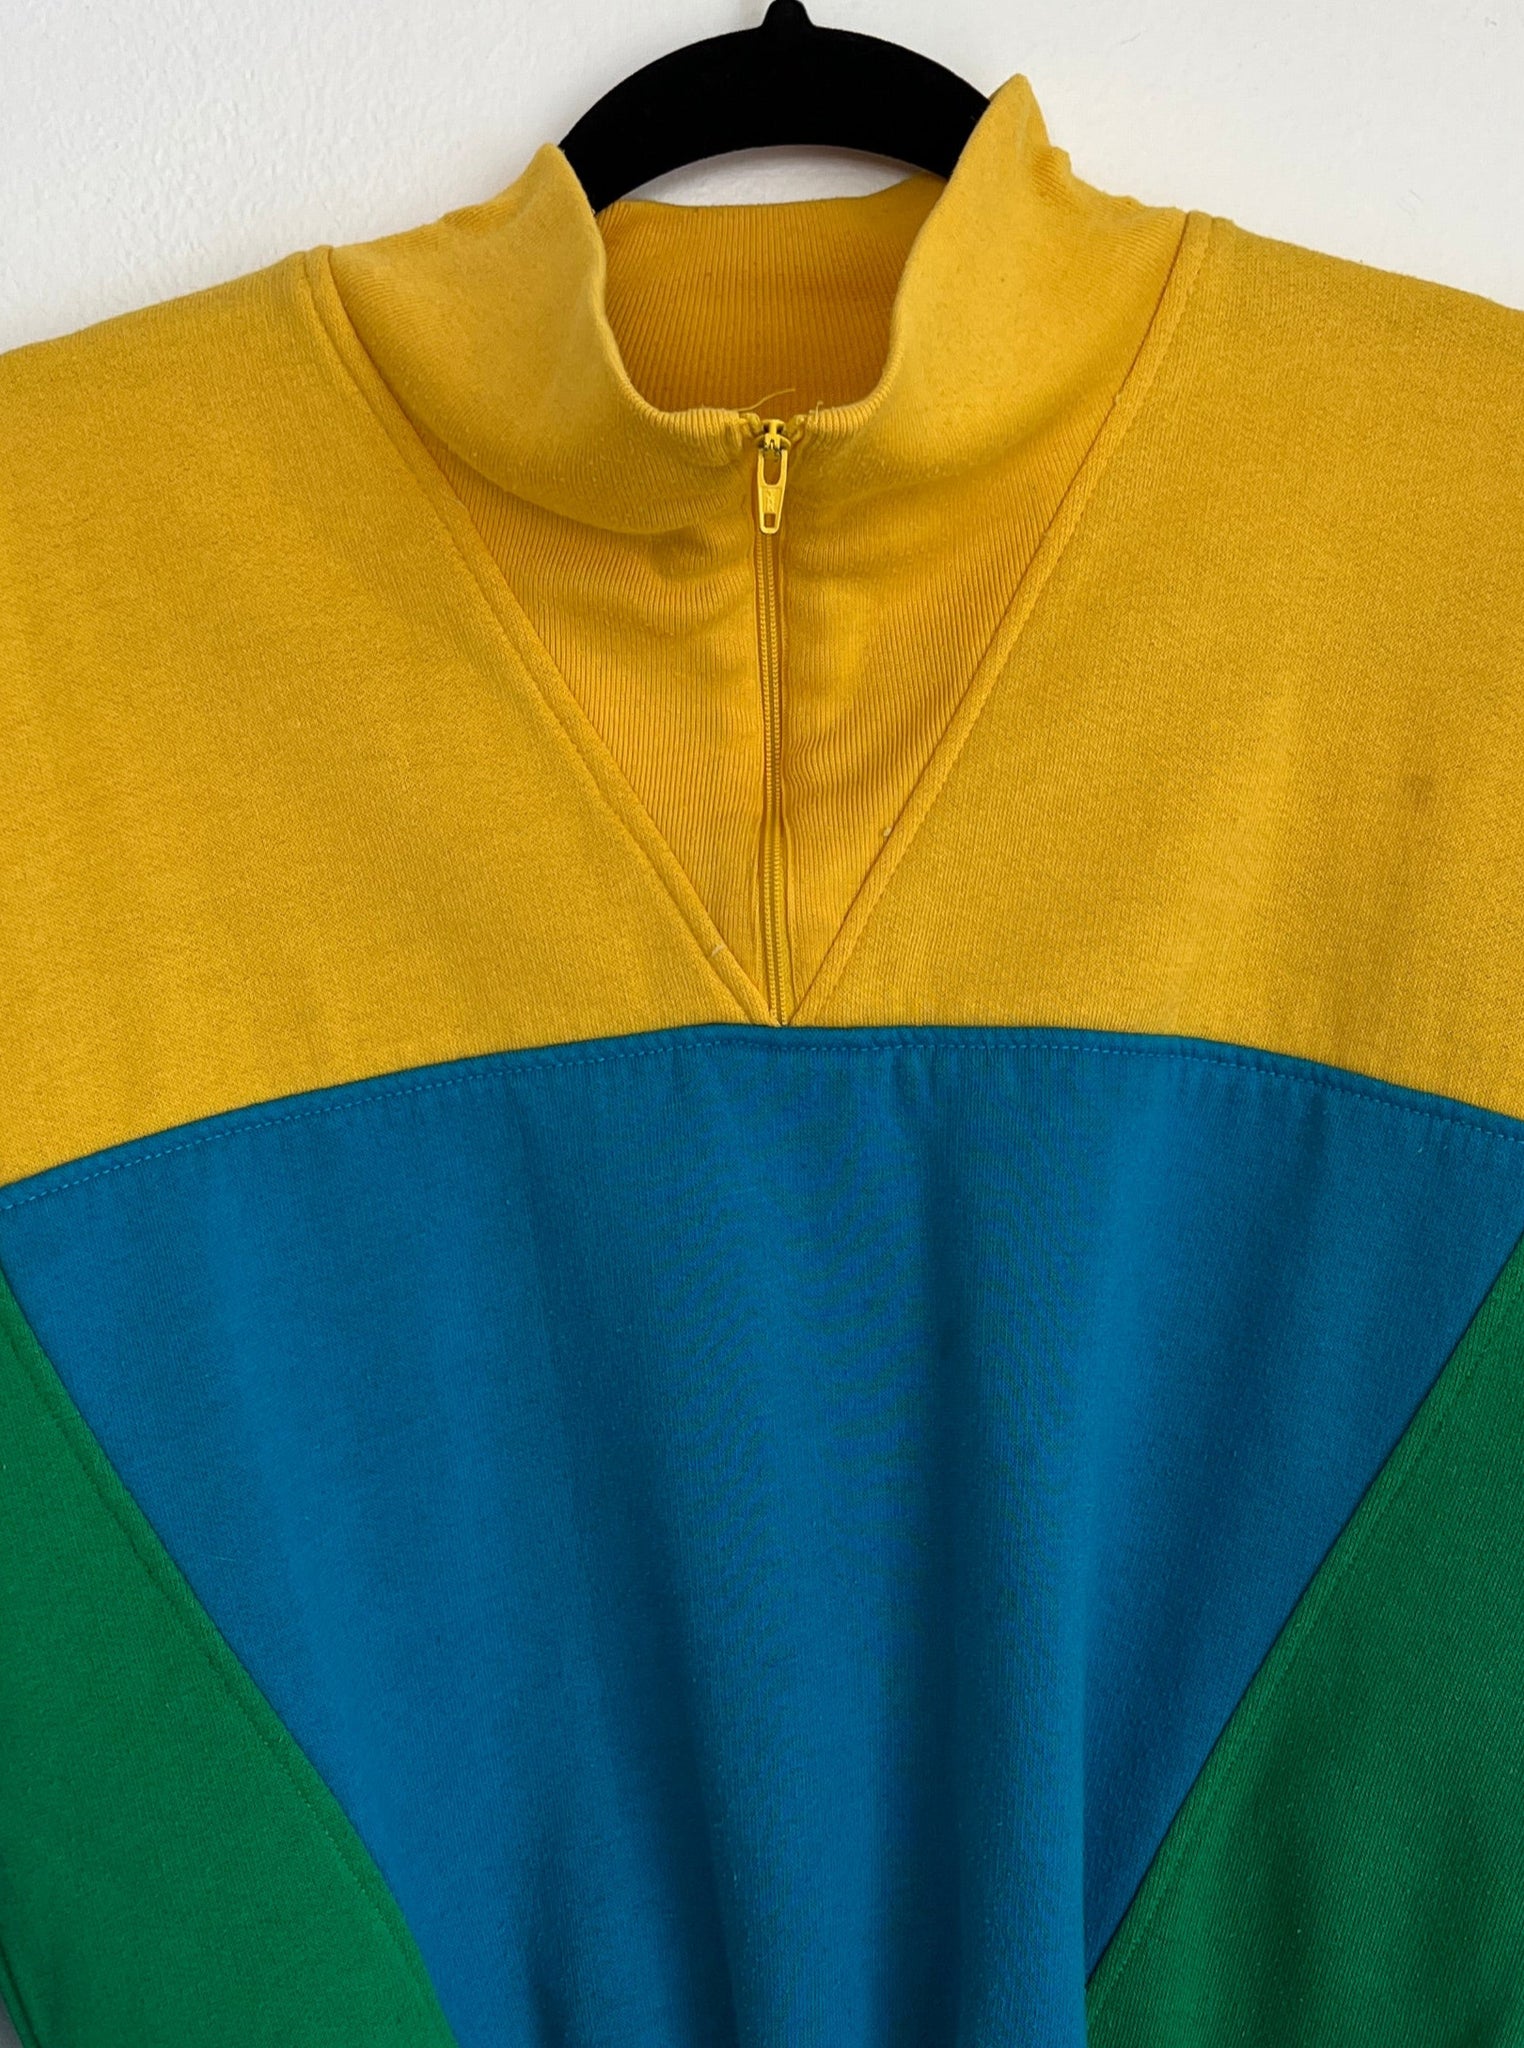 1980s TSHIRT- SWEATSHIRT- yellow/teal/green color block